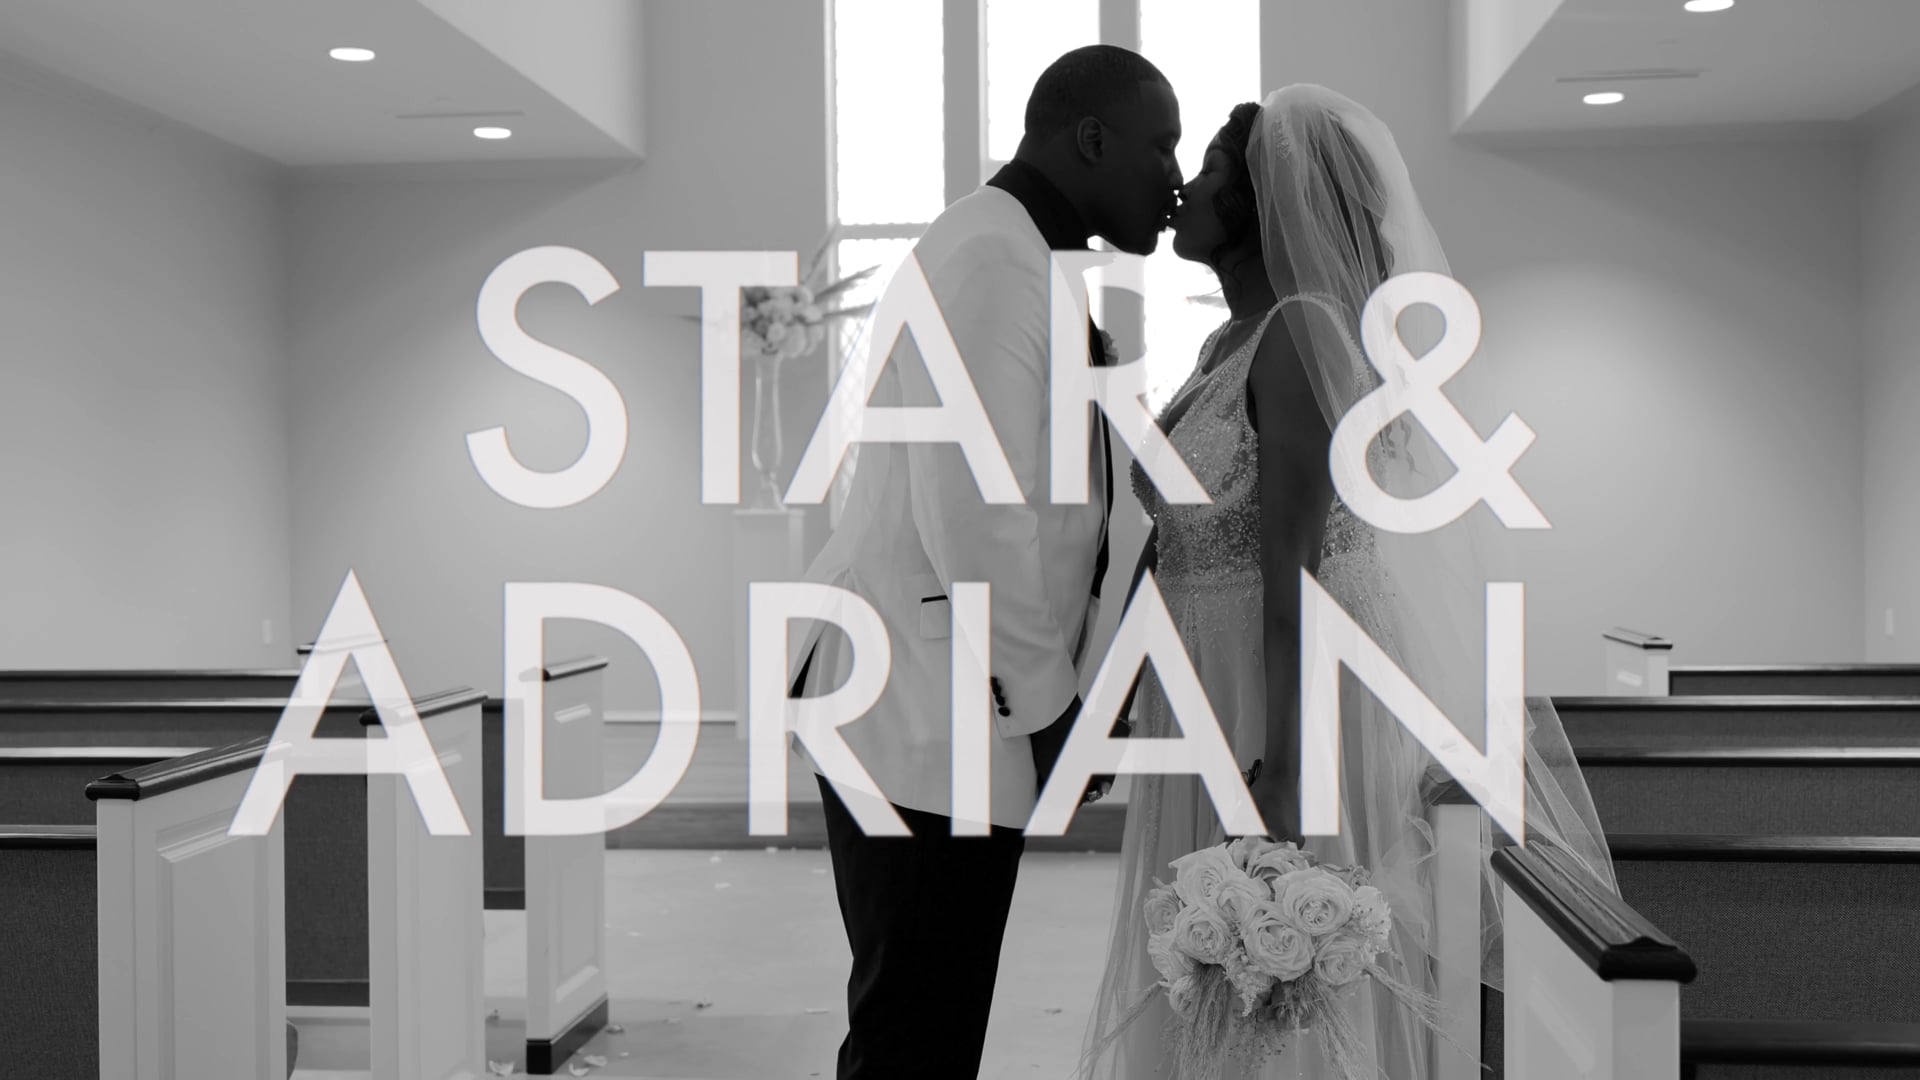 Star & Adrian Teaser 4K